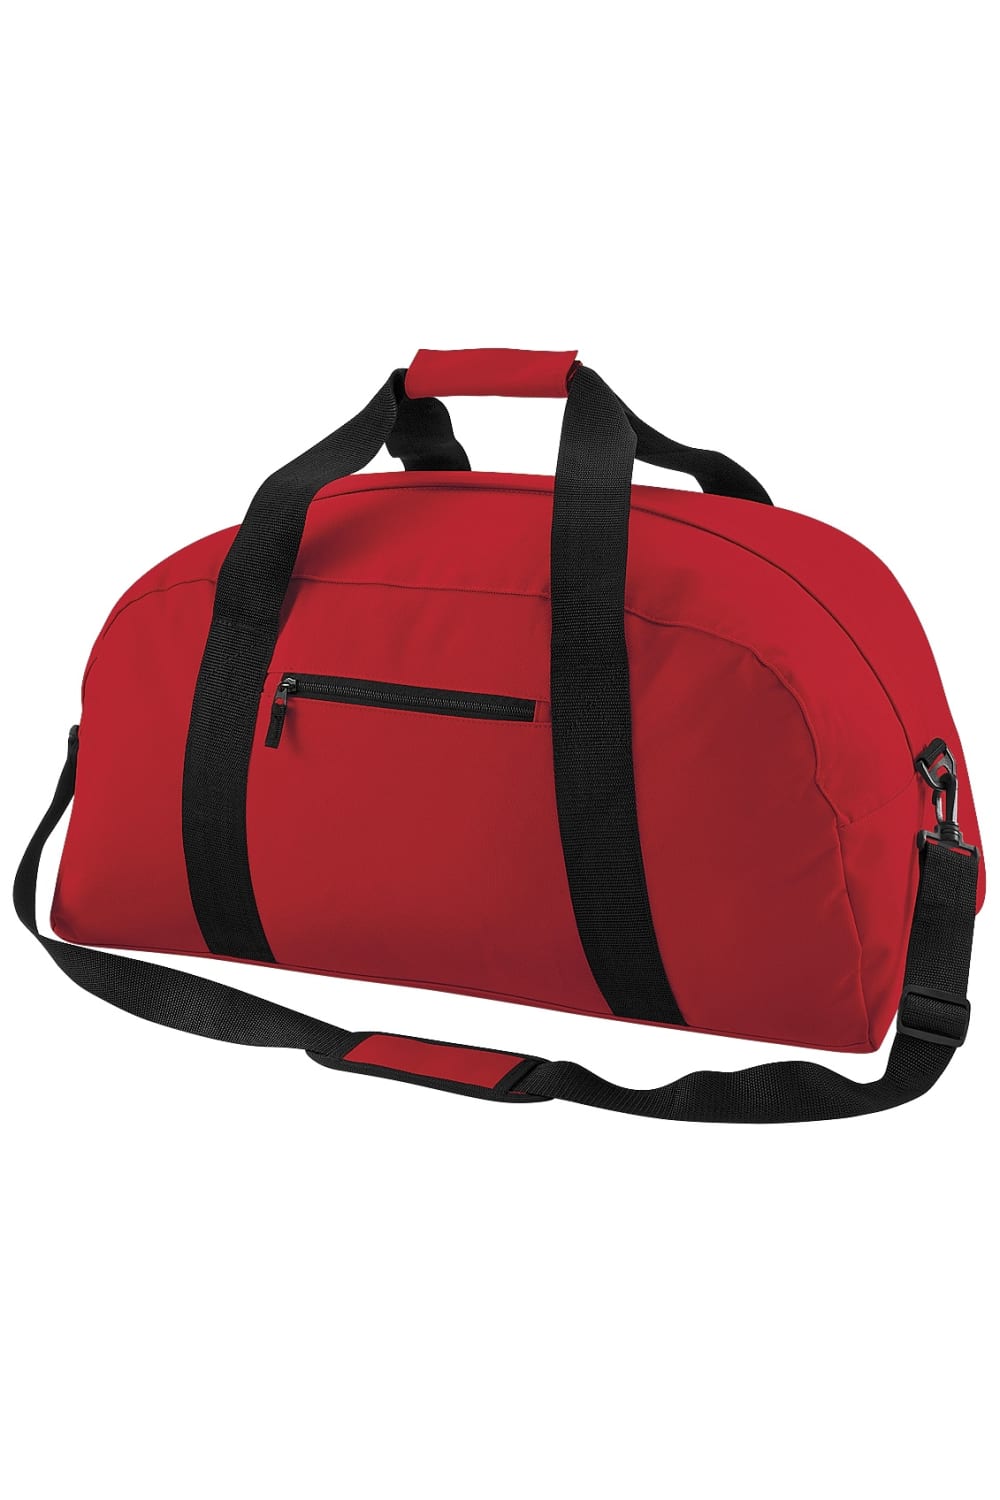 Classic Holdall/Duffel Travel Bag - Classic Red